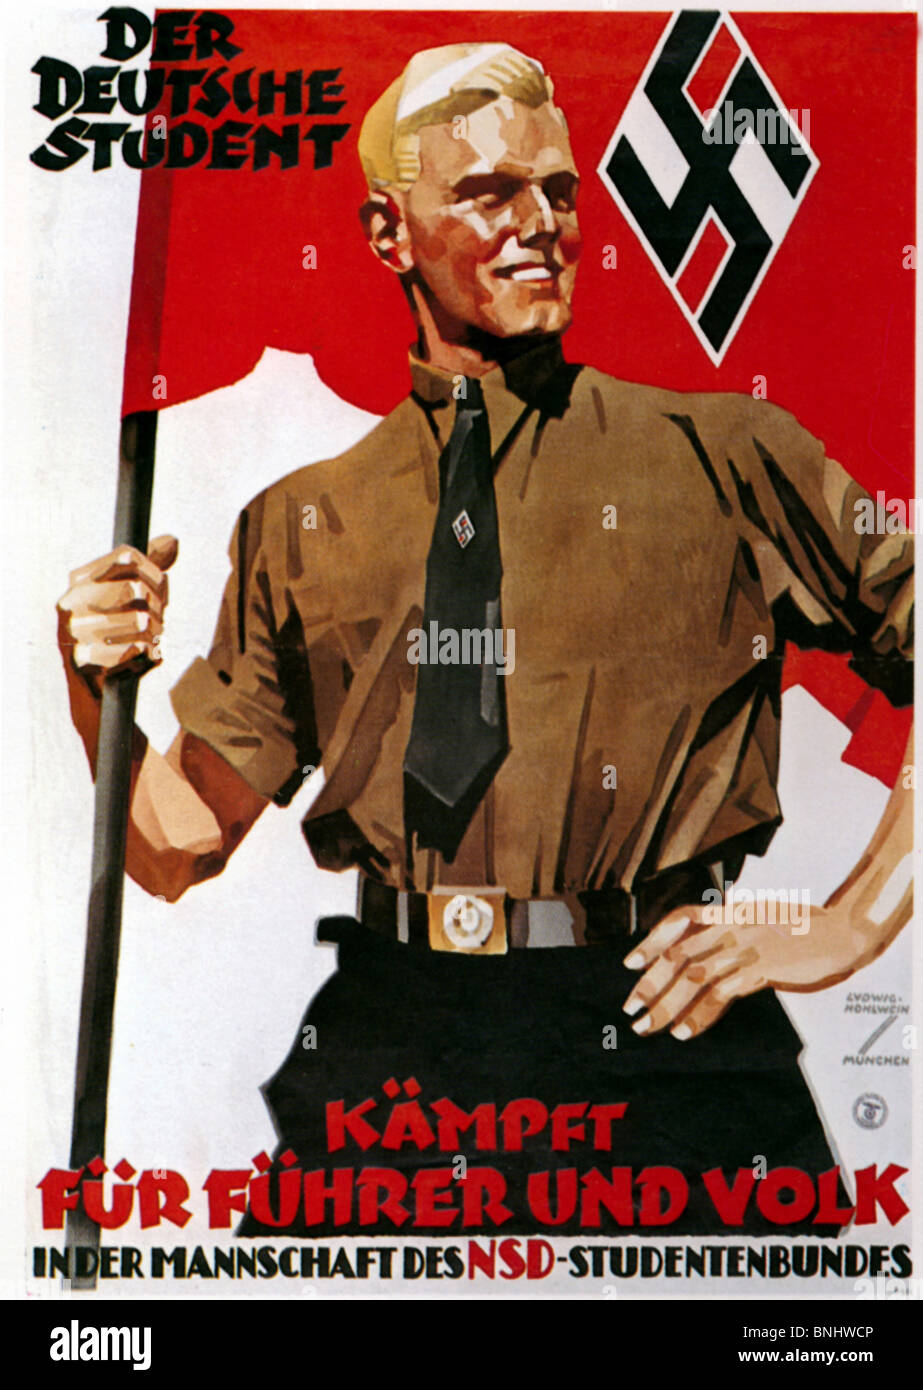 The German Student Poster Nazi Germany NS-Studentenbund 30s Thirties by Ludwig Hohlwein Nazism Germany history historic Stock Photo